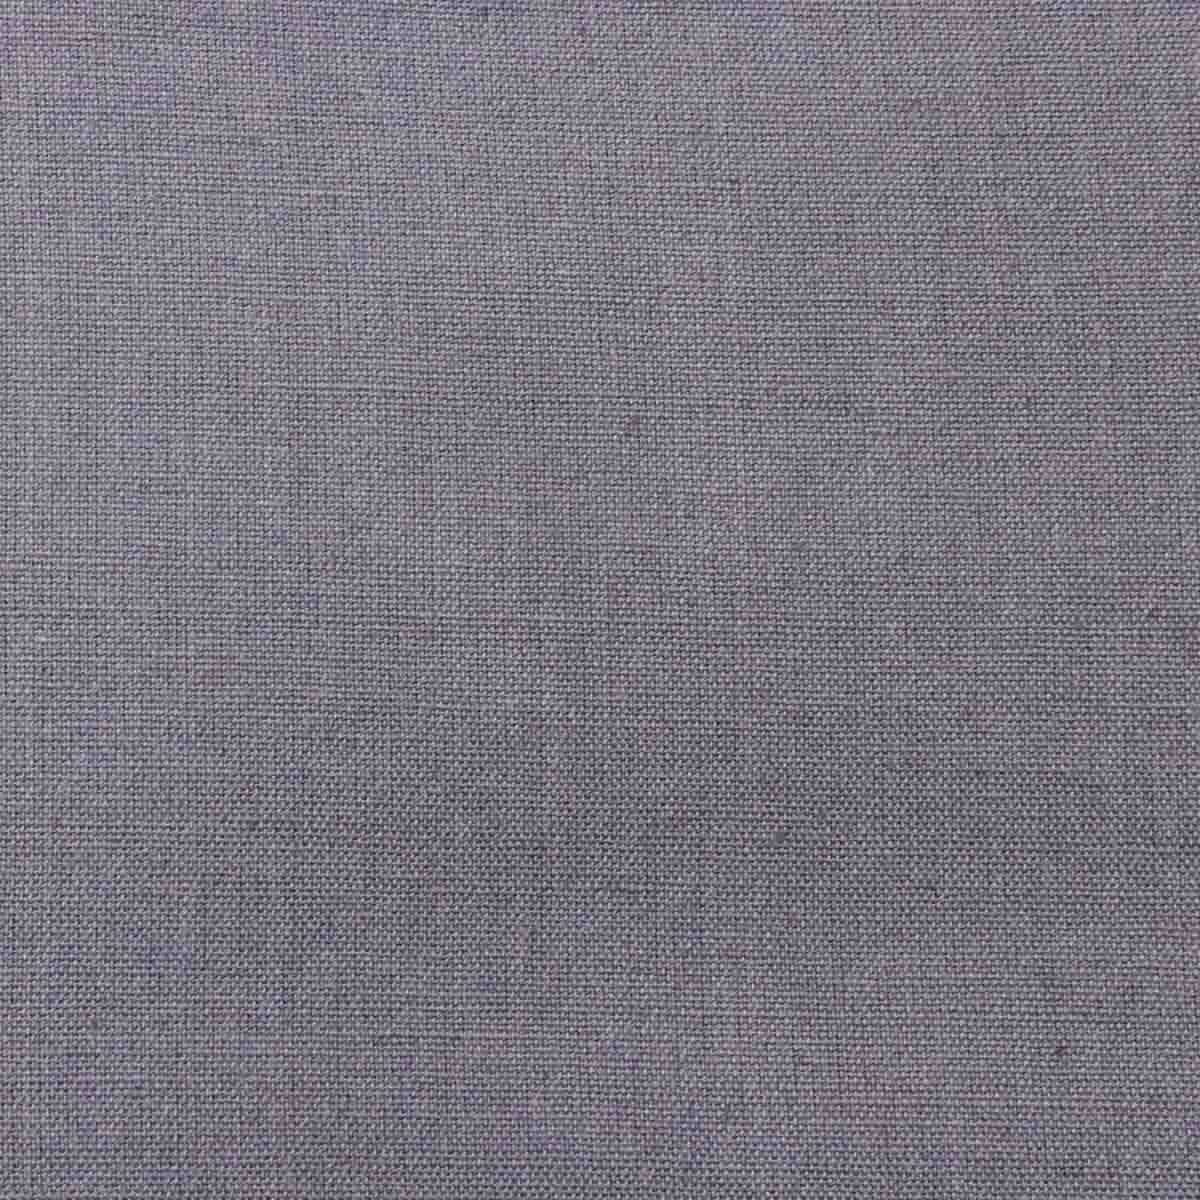 Dhabu Plain Cotton Gray (2)